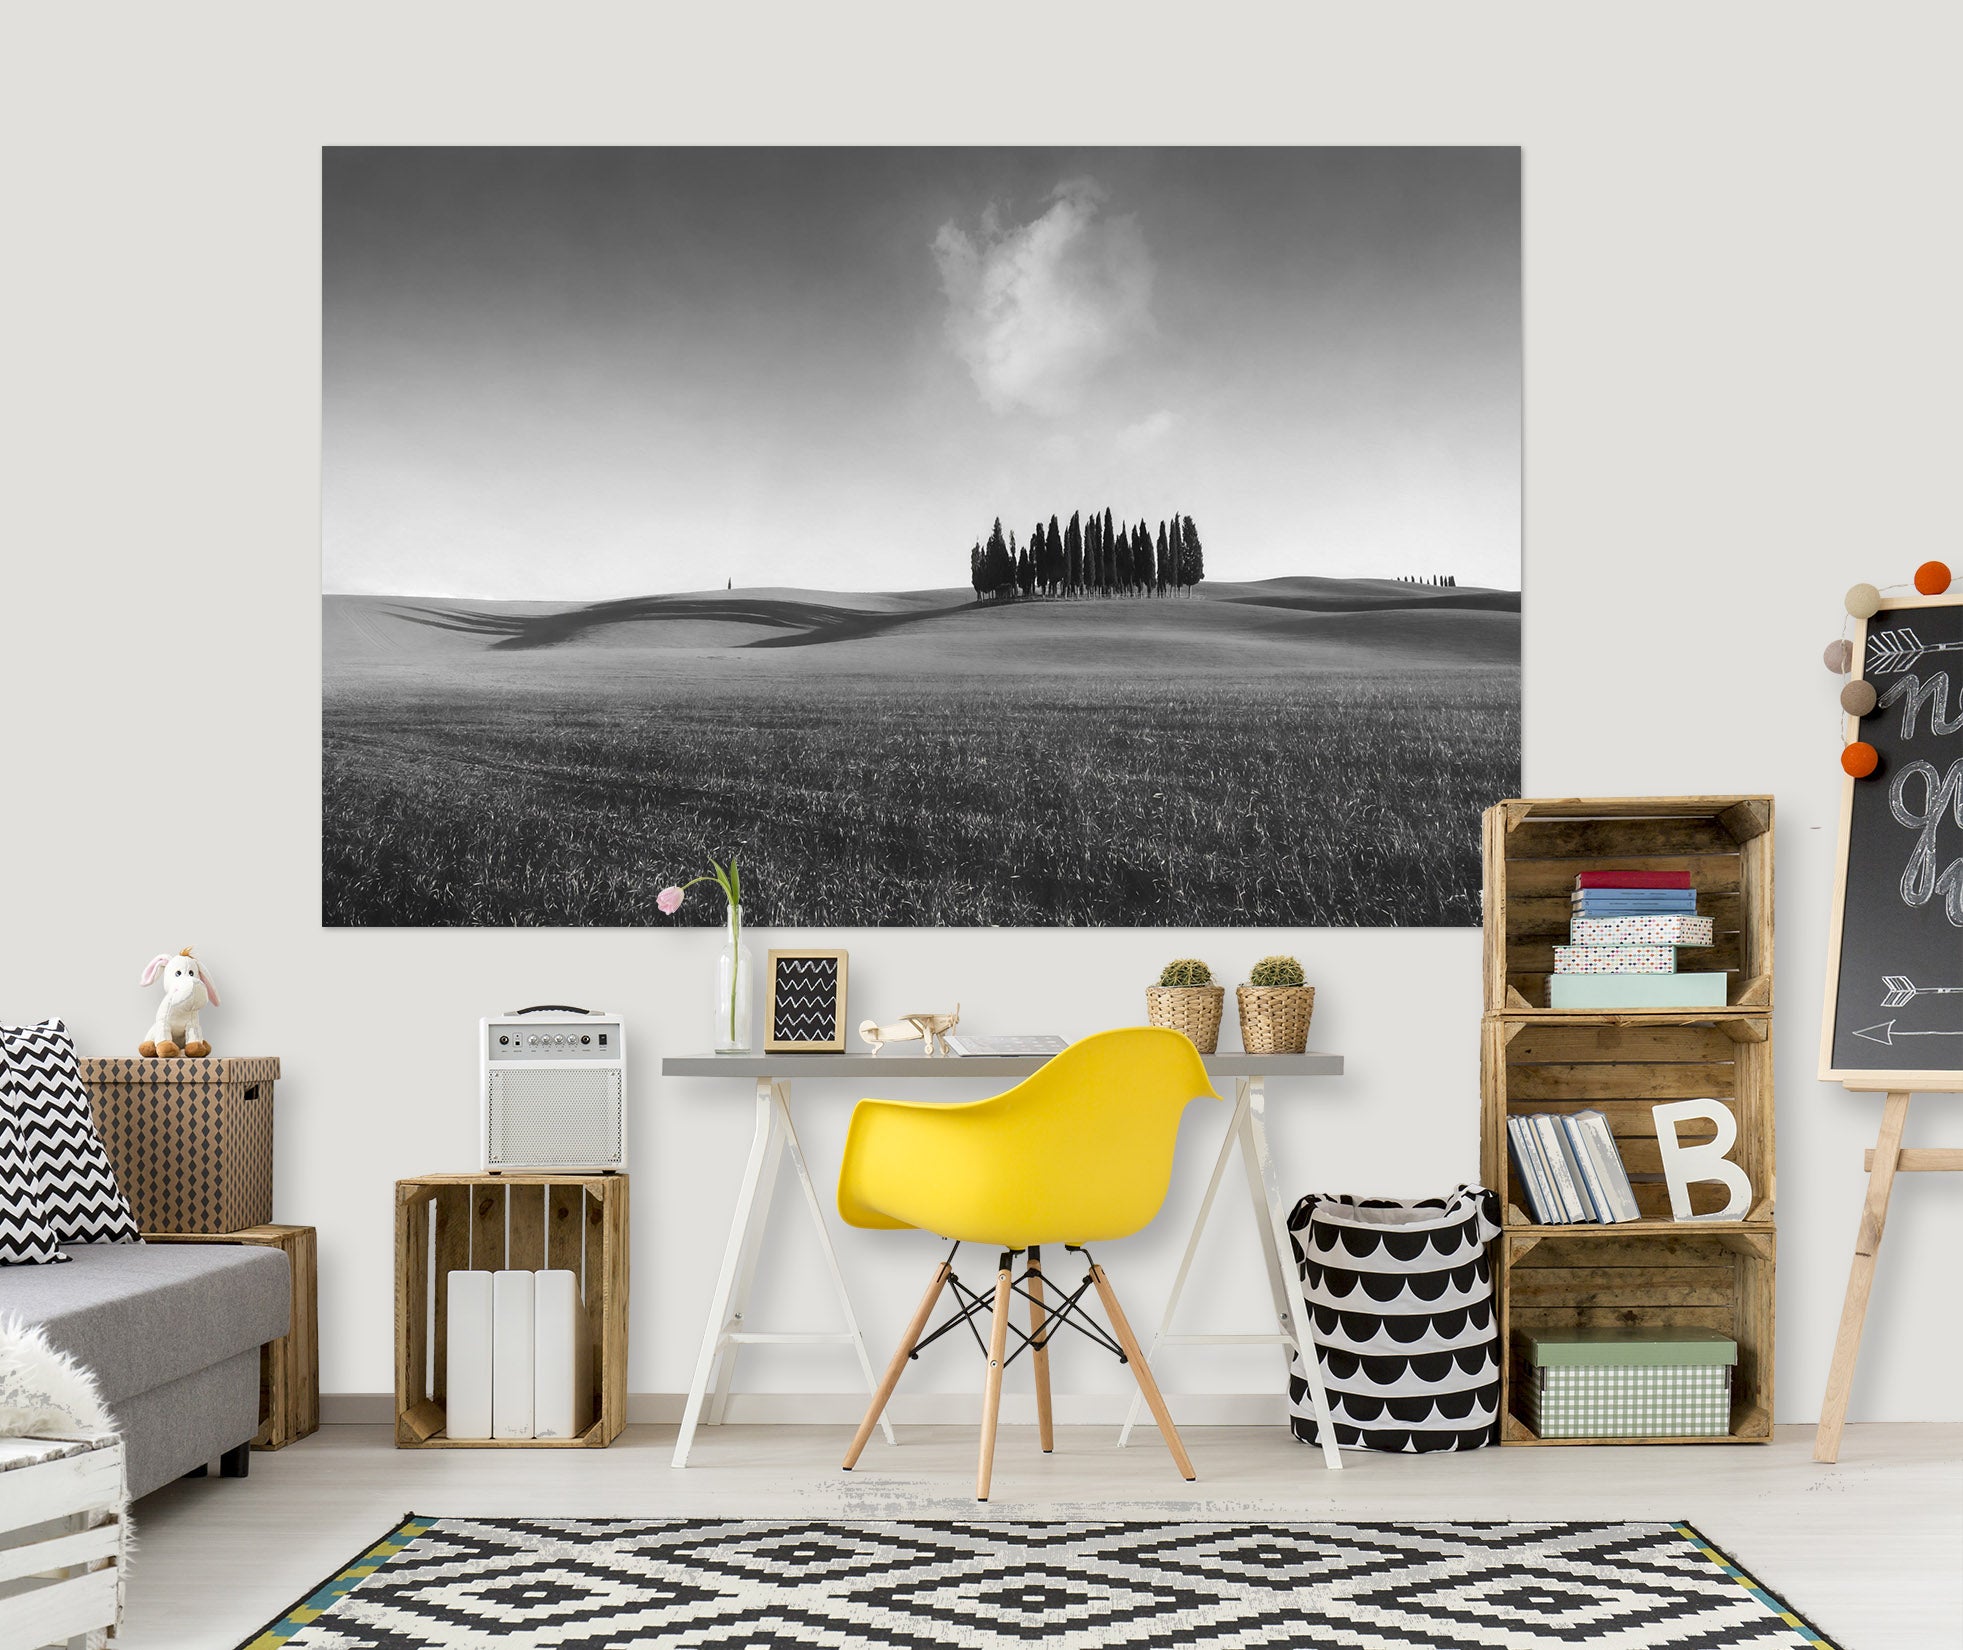 3D Grey Desert 144 Marco Carmassi Wall Sticker